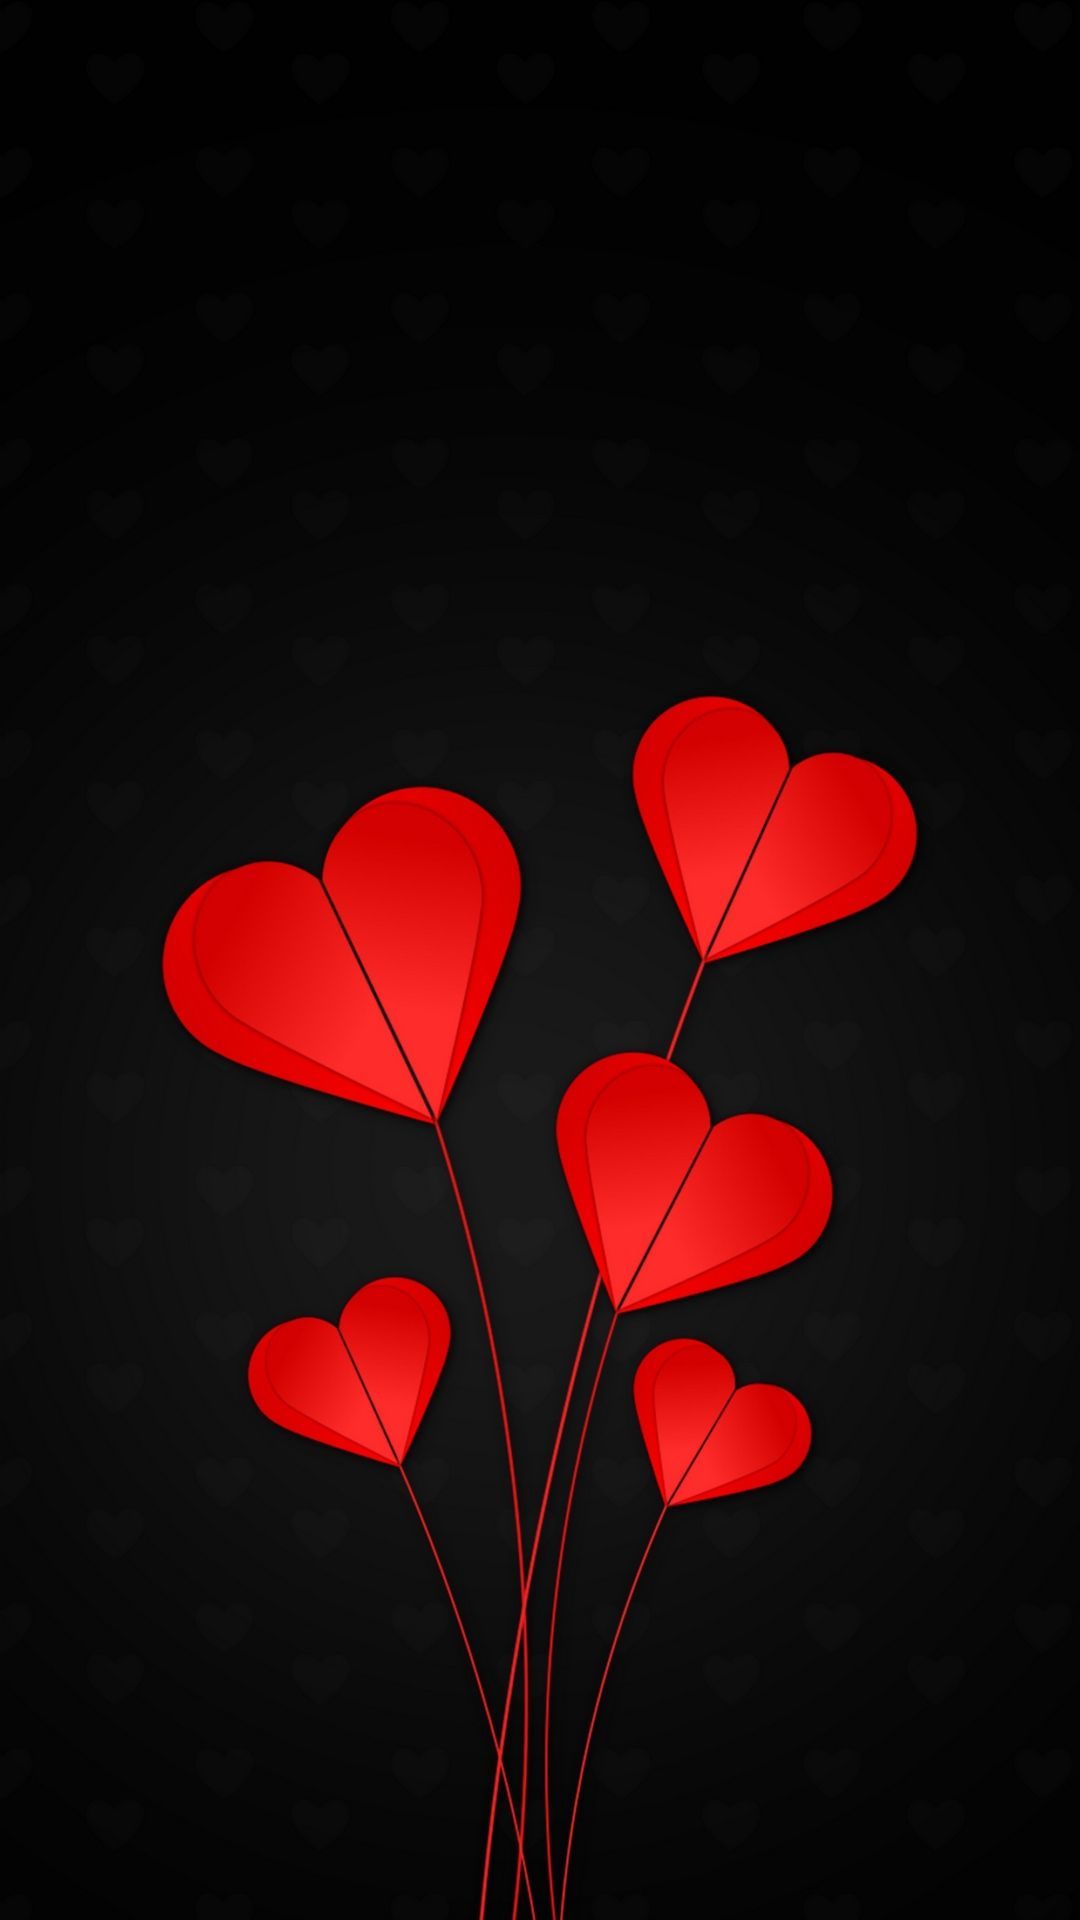 red #black background #hearts #love #wallpaper #lockscreen #mobile